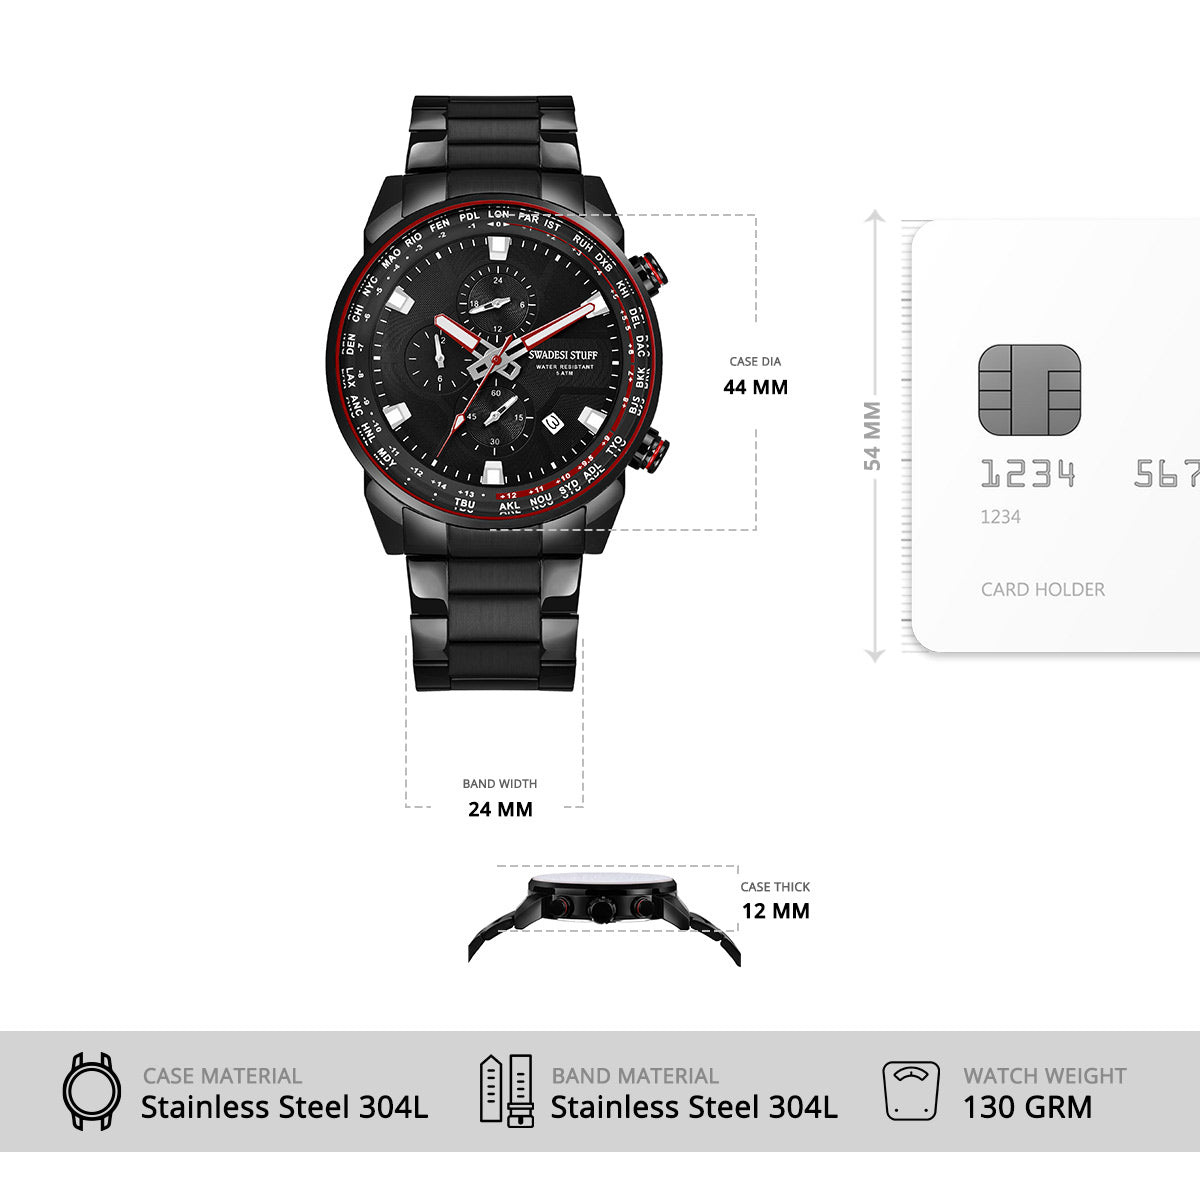 Coupe - Black - Premium Metal Watch For Men